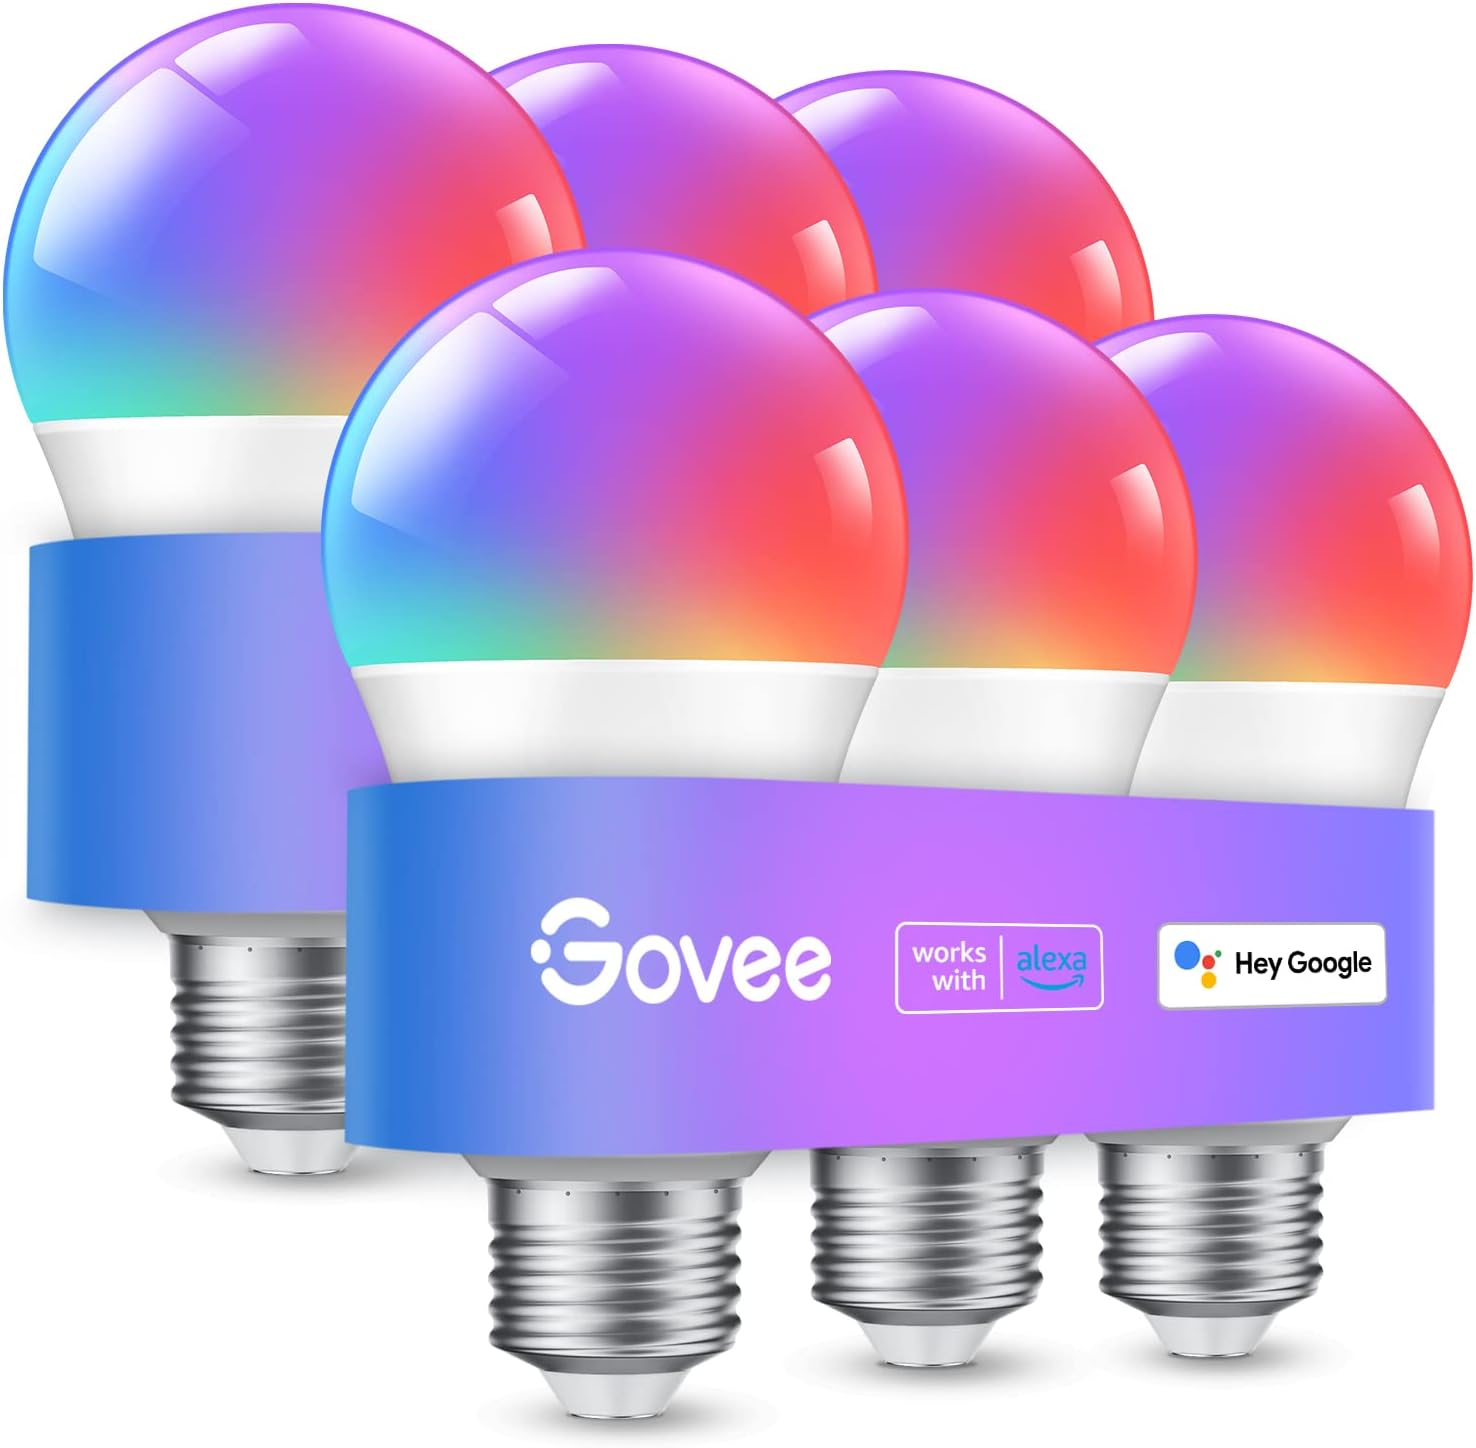 Govee Smart Light Bulbs, WiFi & Bluetooth Color Changing Light Bulbs, Music Sync, 16 Million DIY Colors RGBWW Color Lights Bulb, Work with Alexa, Google Assistant Home App, 6 Pack